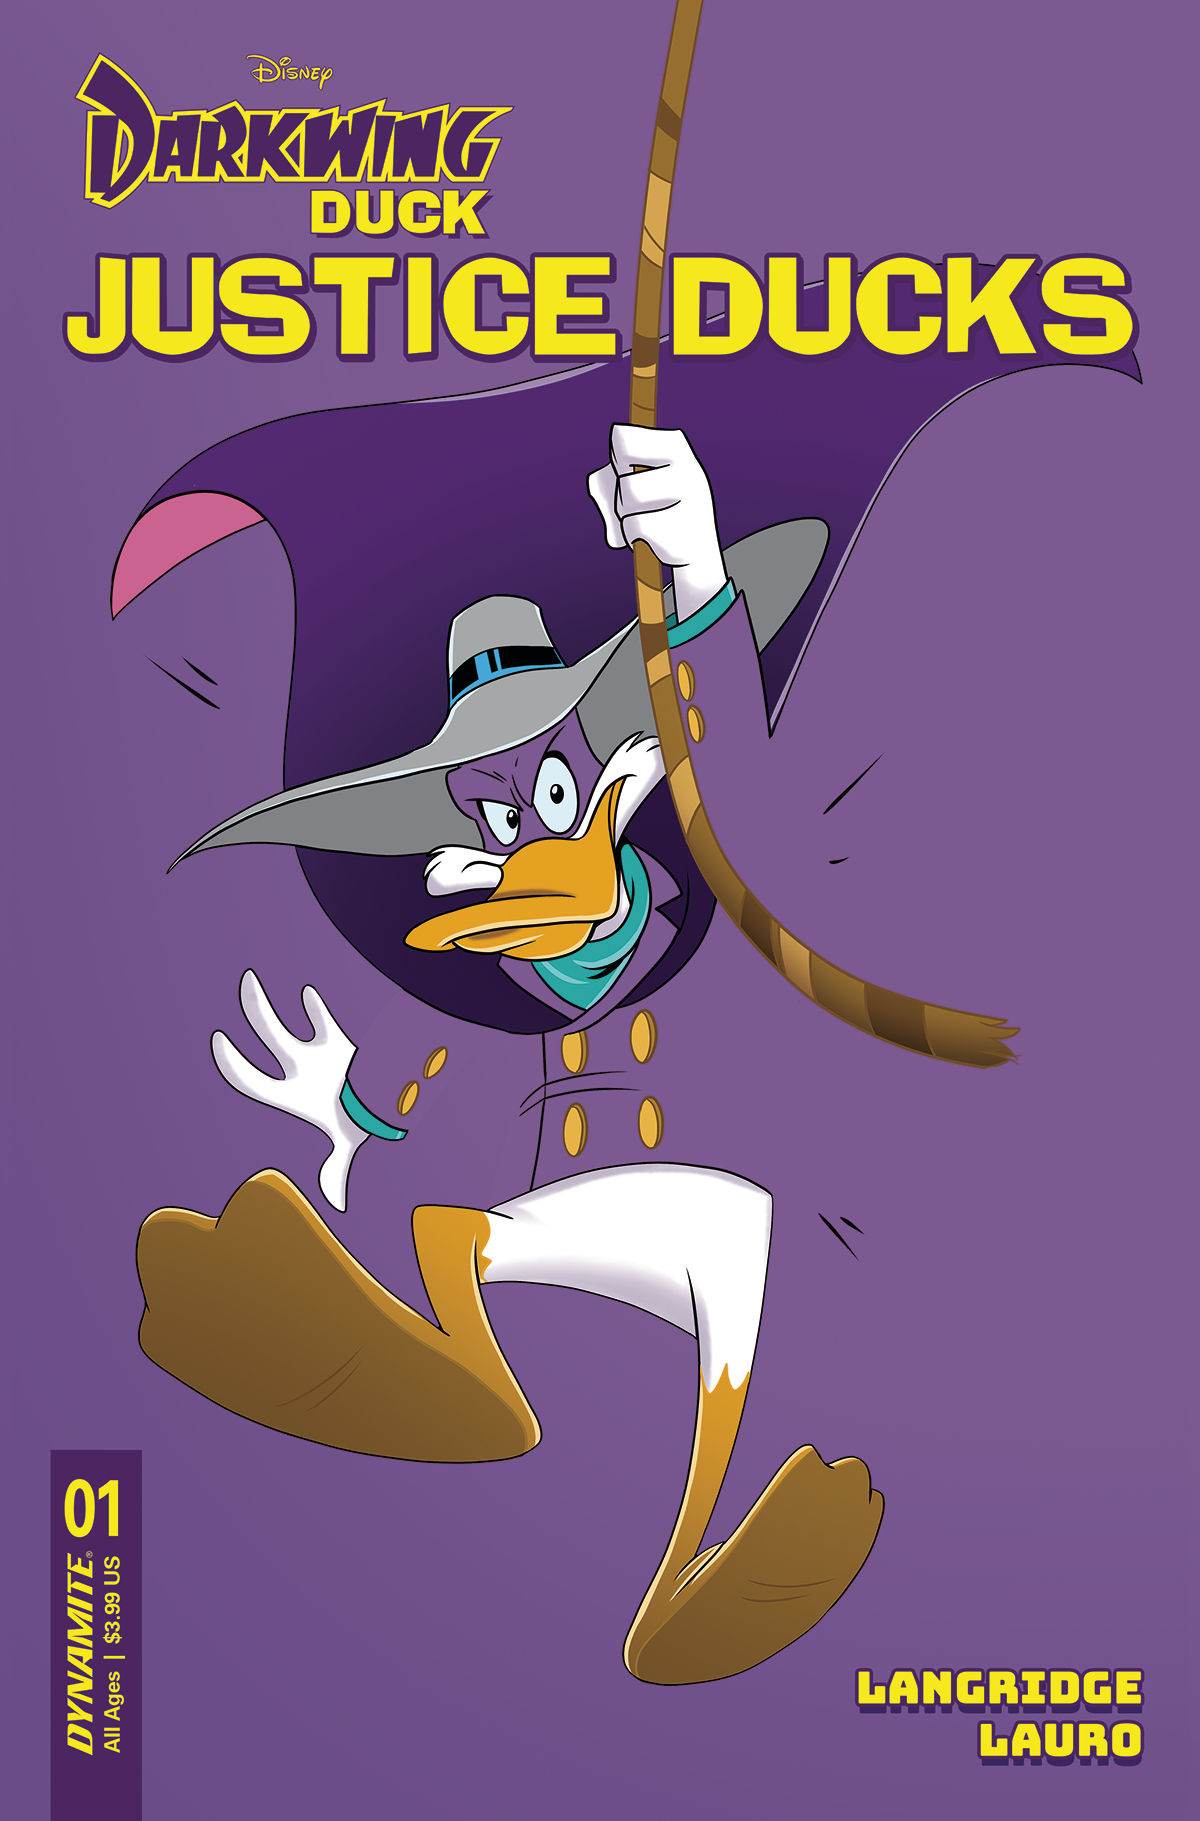 Darkwing Duck: Justice Ducks #1 Cover D Forstner Negative Space